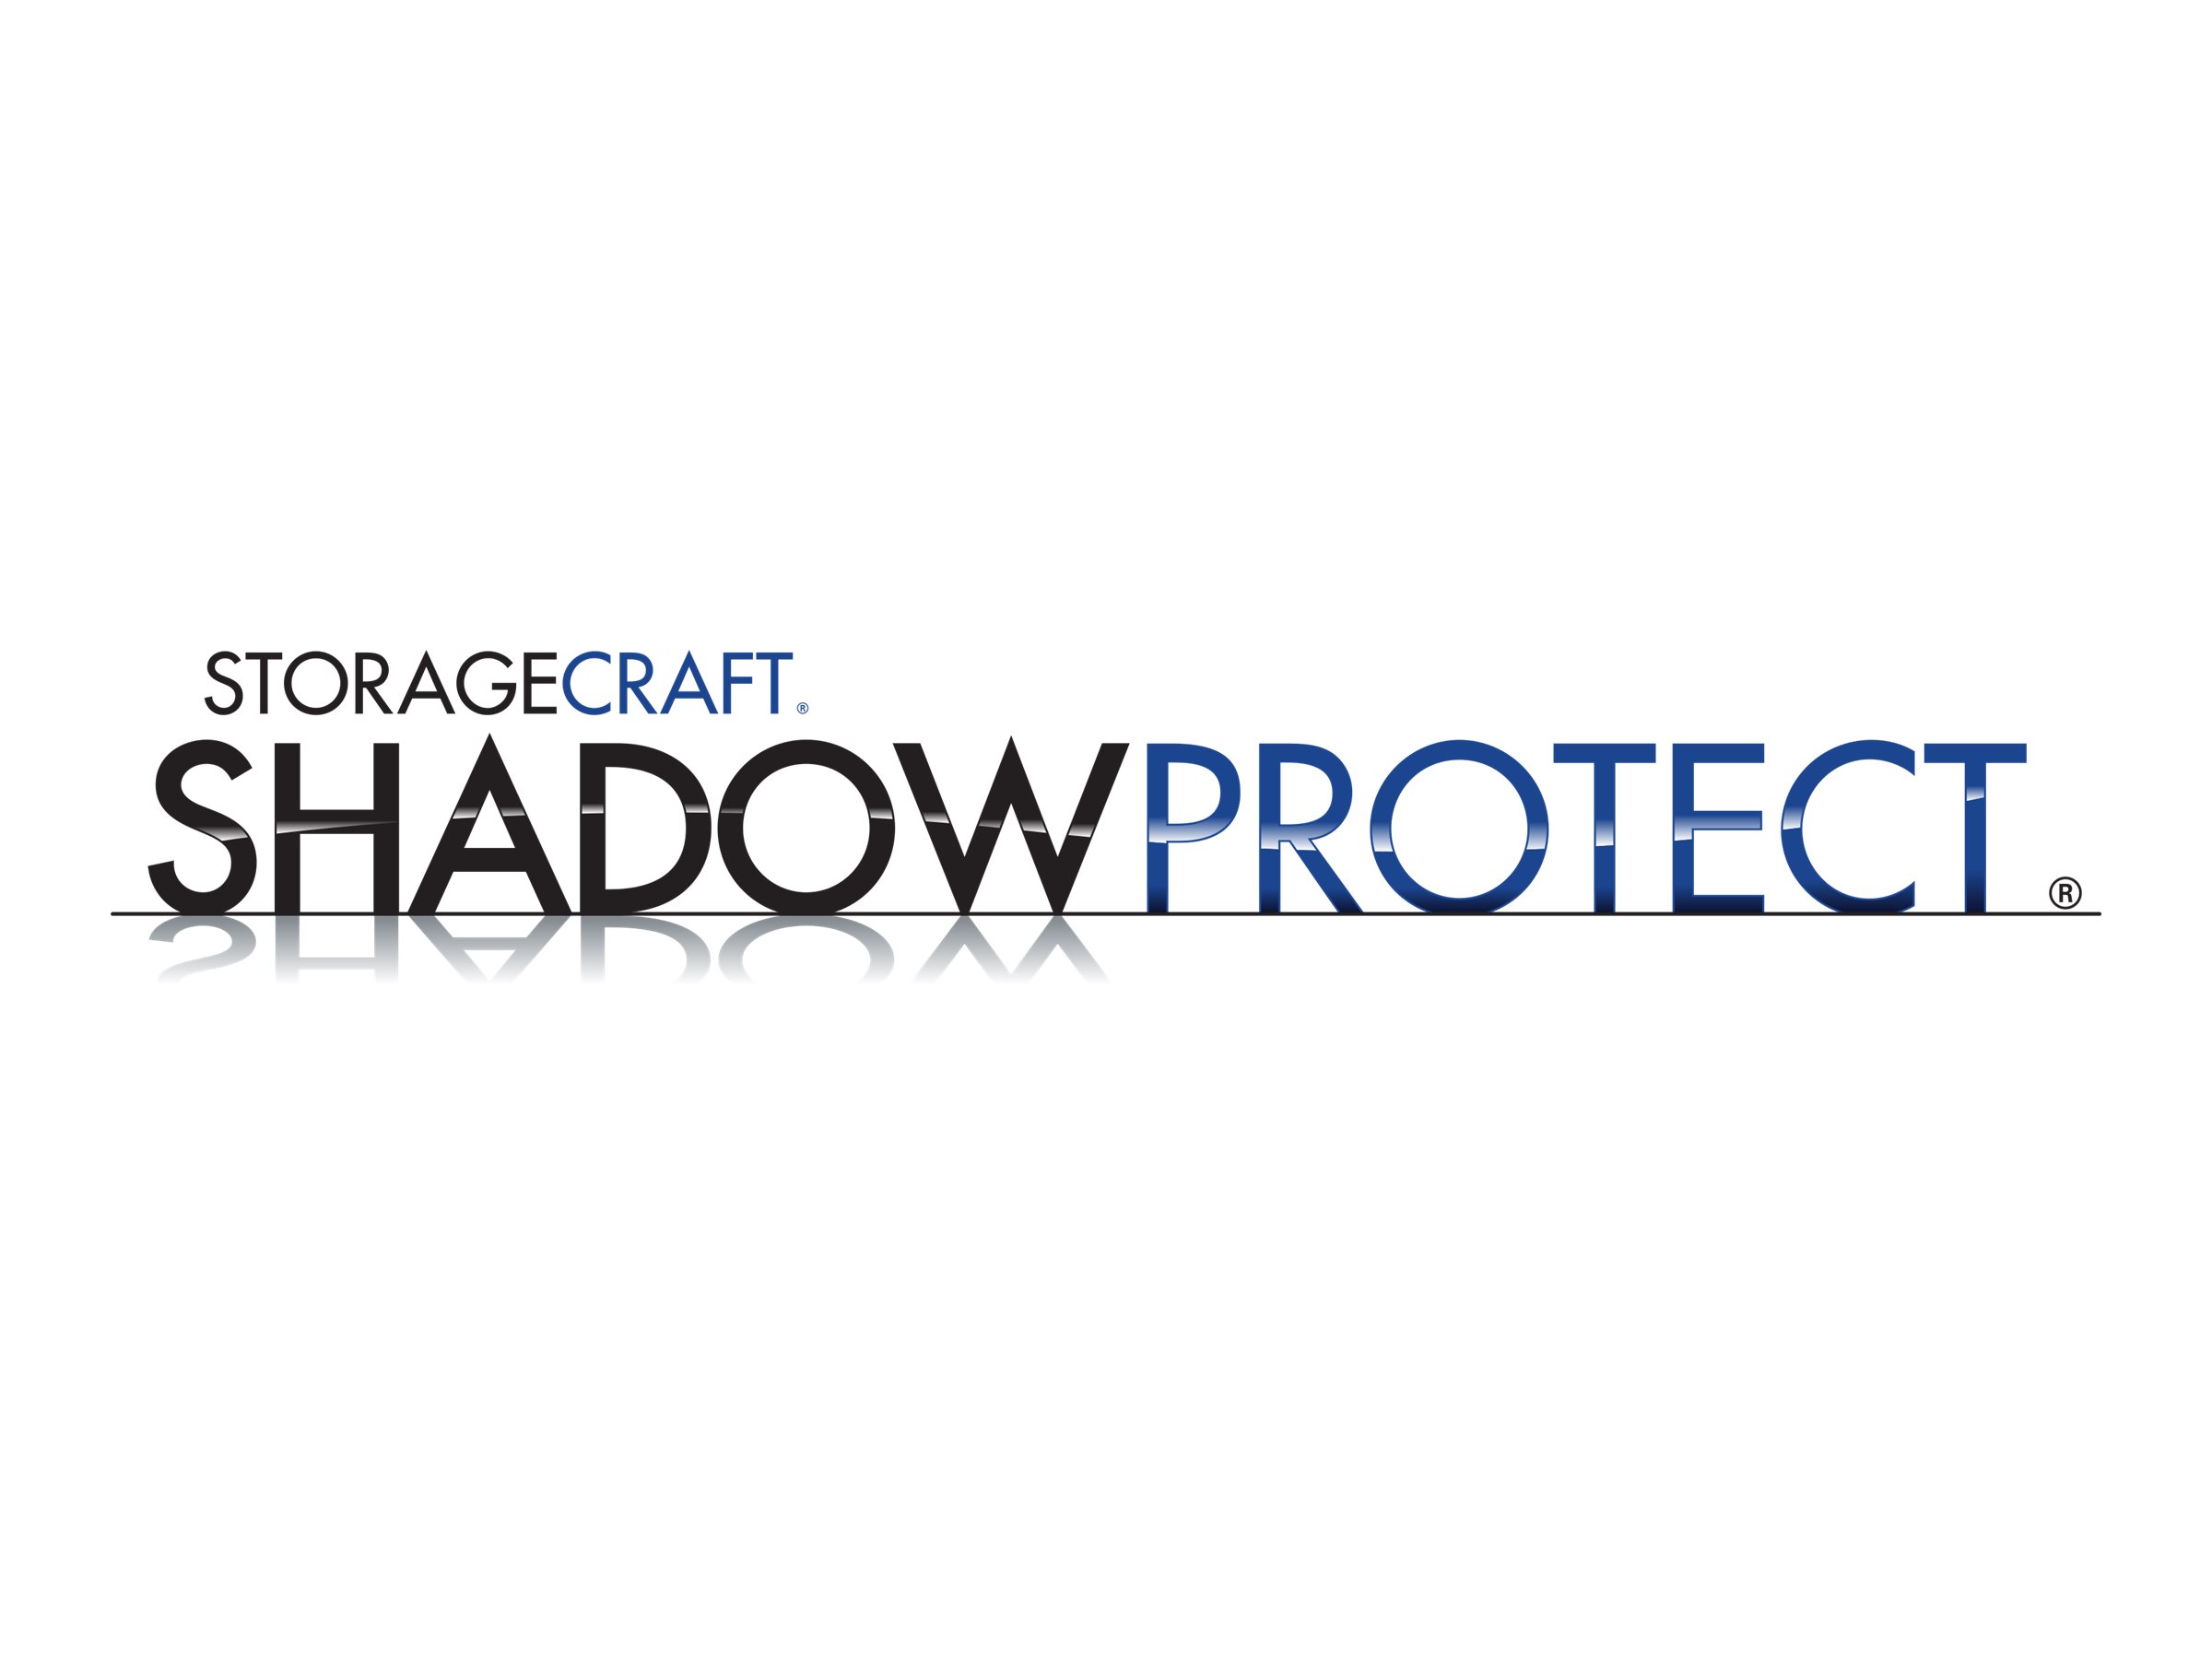 ShadowProtect Granular Recovery for Exchange - (v. 8.x) - Upgrade-Lizenz - unbegrenzte Anzahl Postfcher - ESD - Win